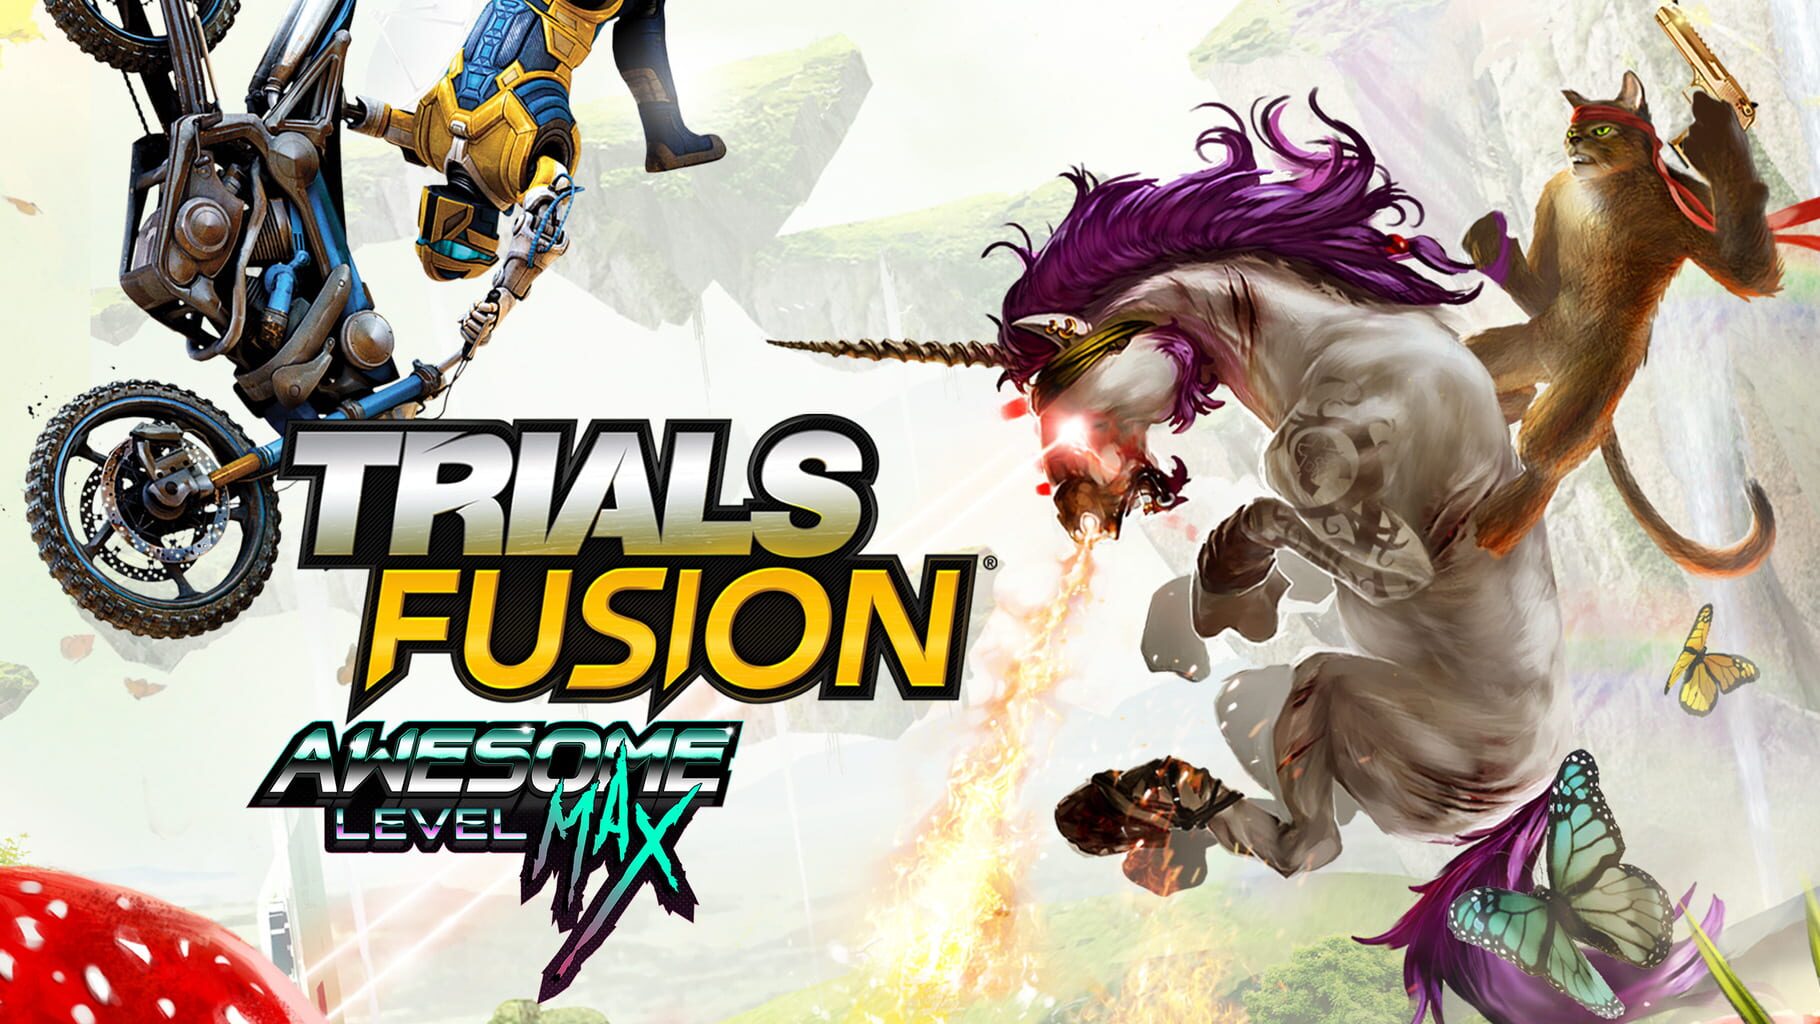 Arte - Trials Fusion: Awesome Level Max